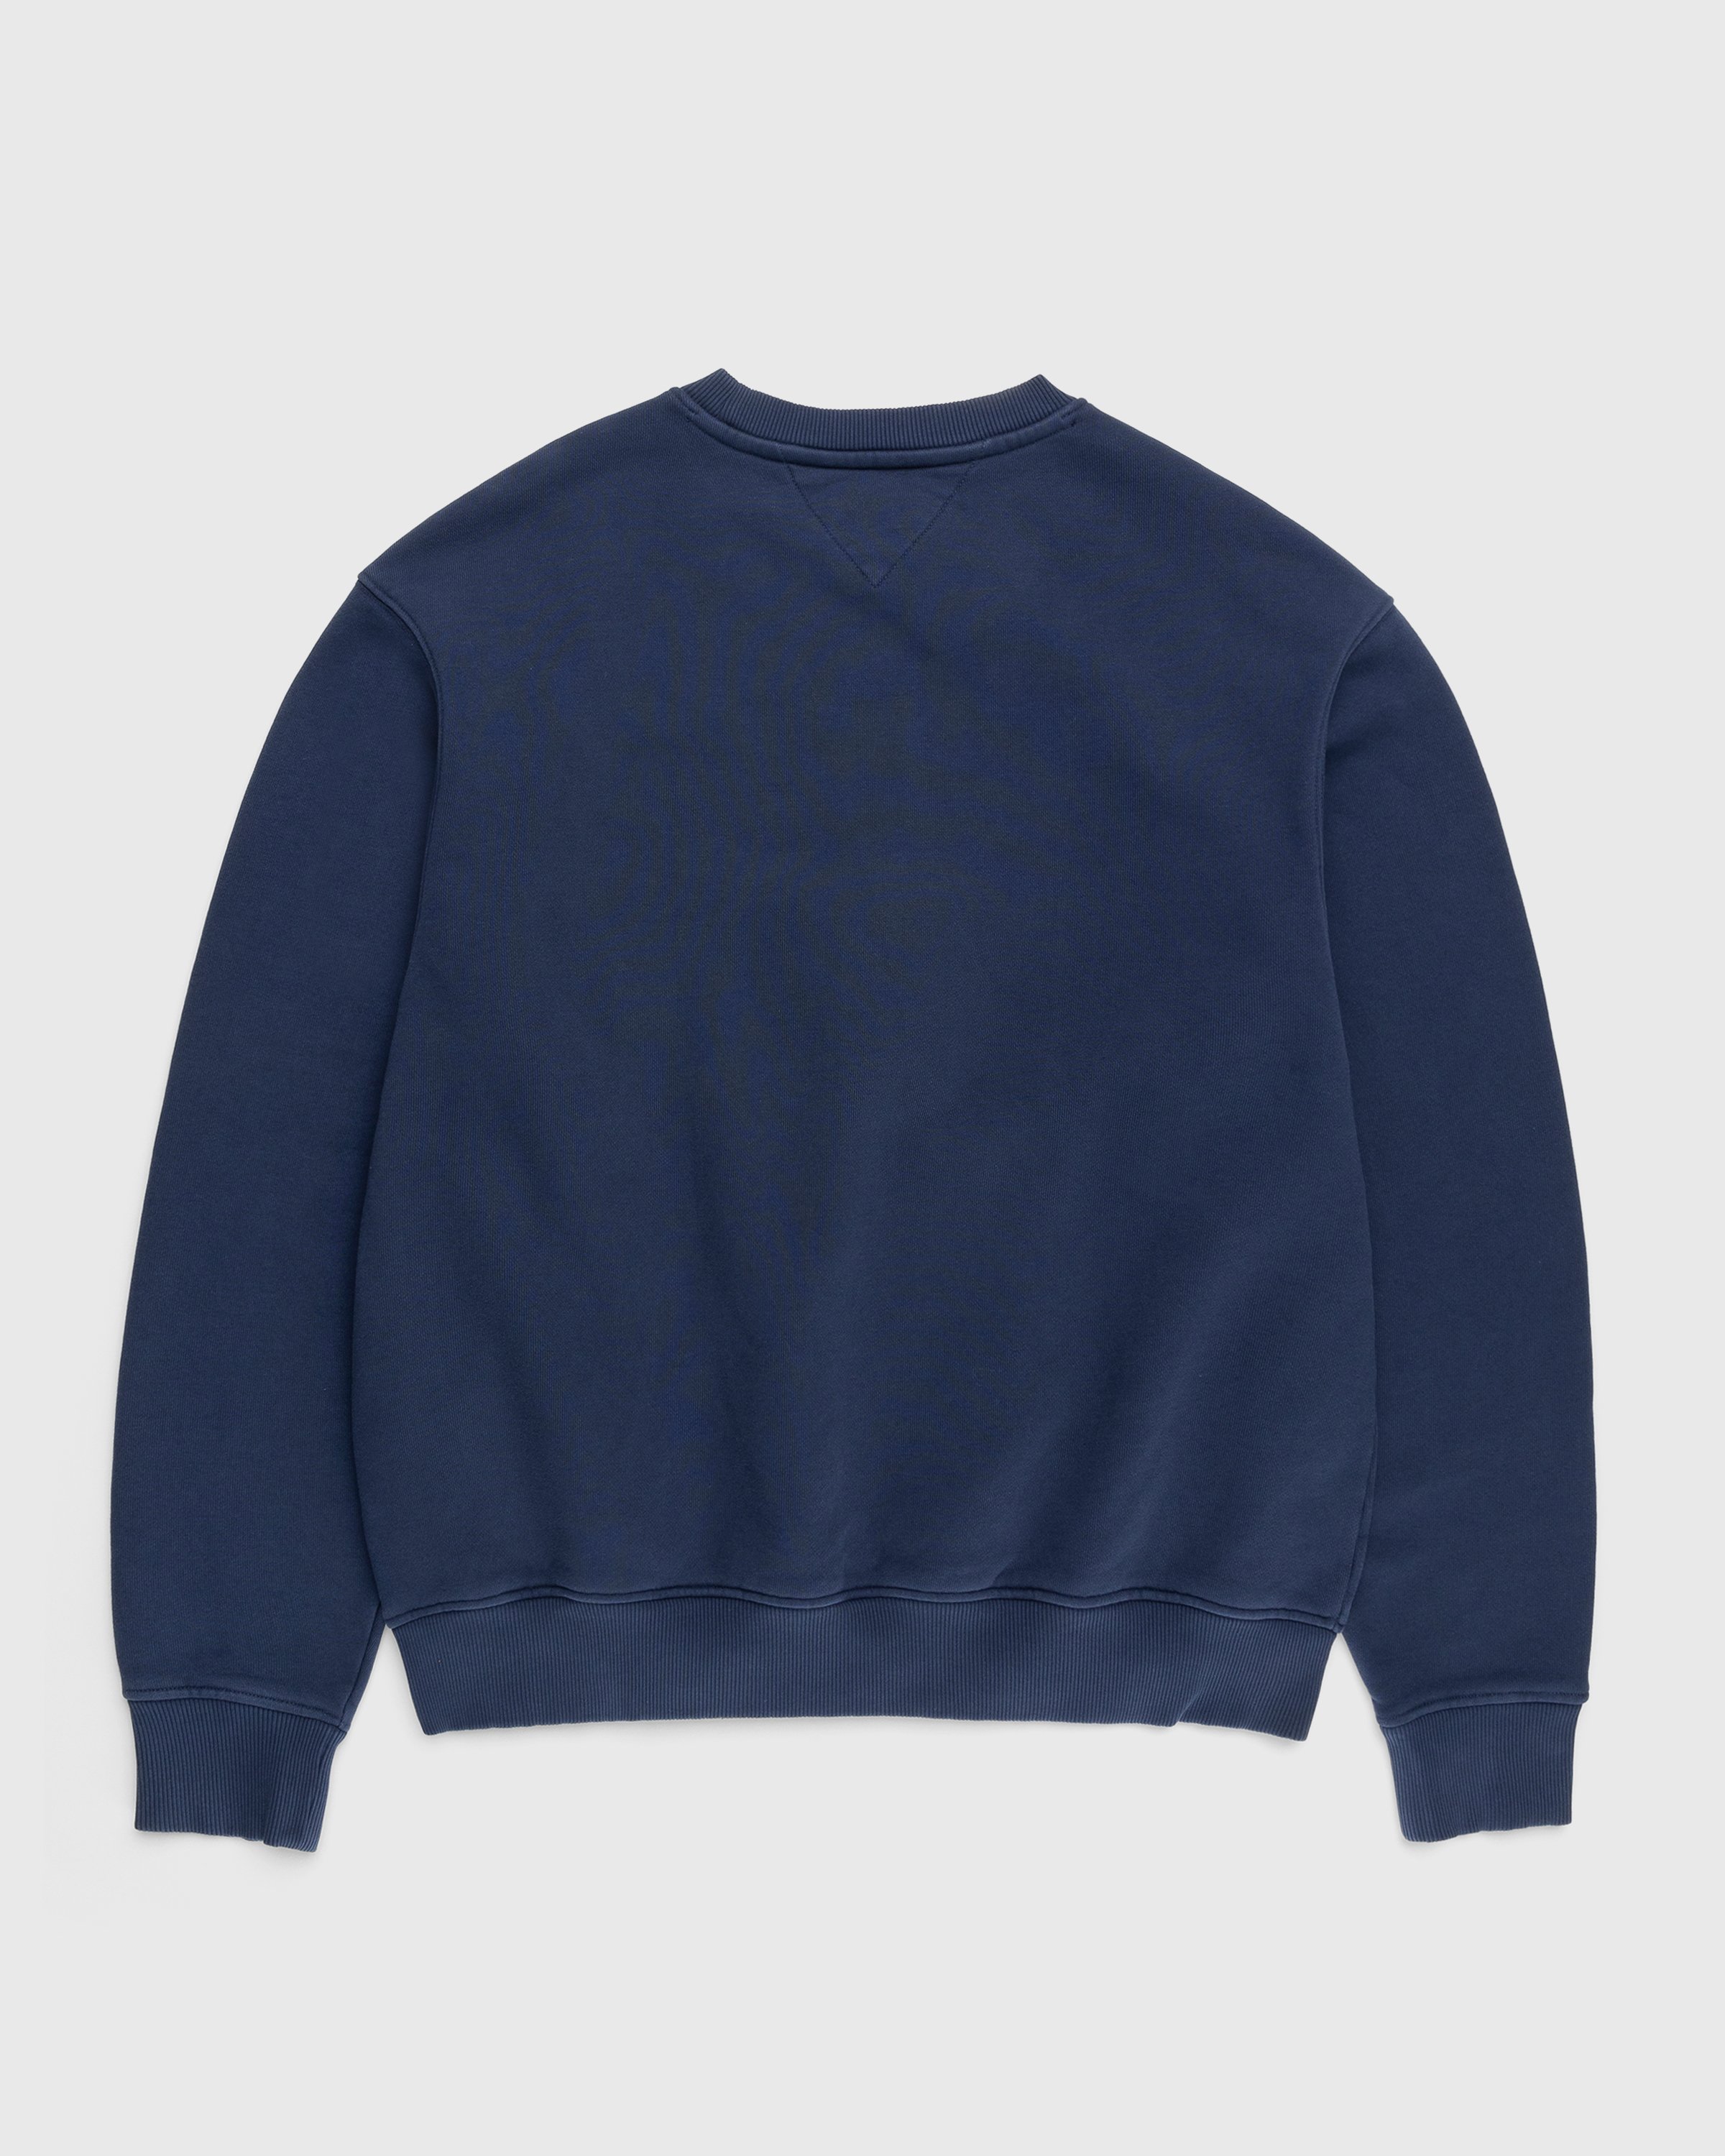 Patta x Tommy Hilfiger - Crewneck Sweatshirt Sport Navy - Clothing - Blue - Image 2